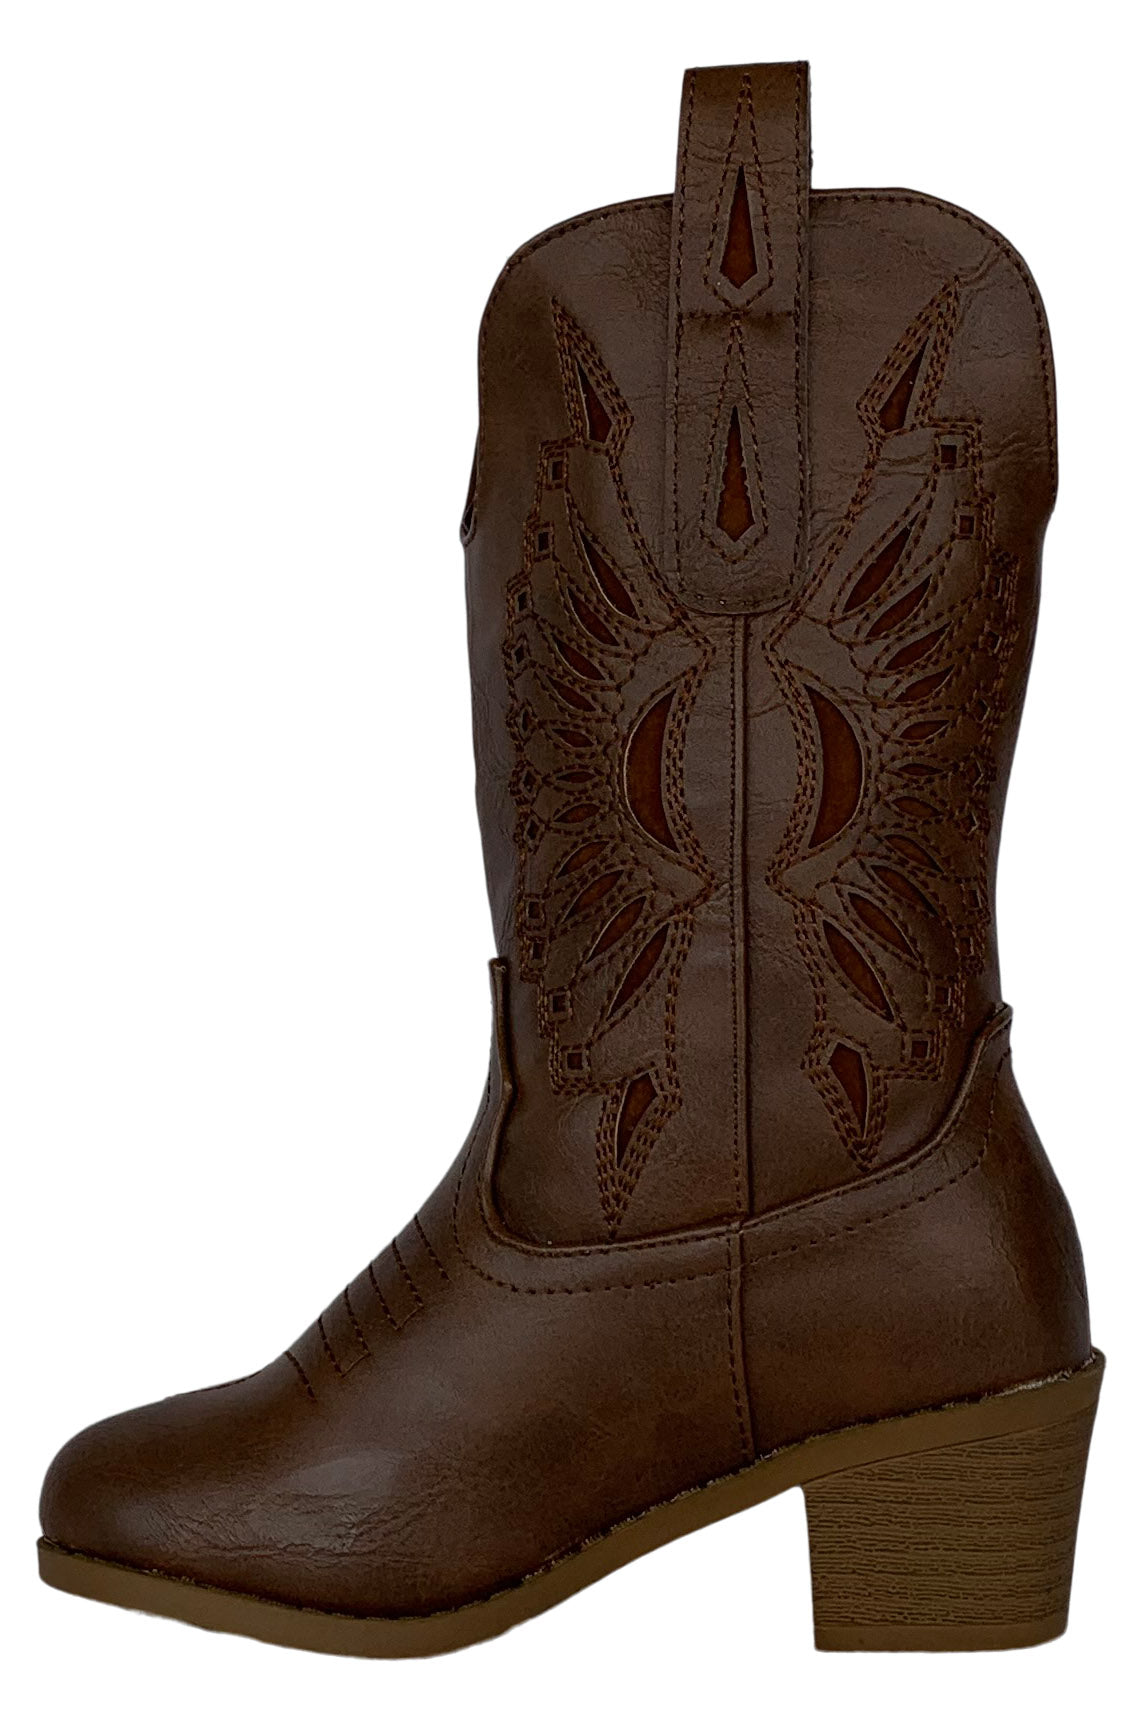 Sunflower Girl Western Boots (Black,Brown)